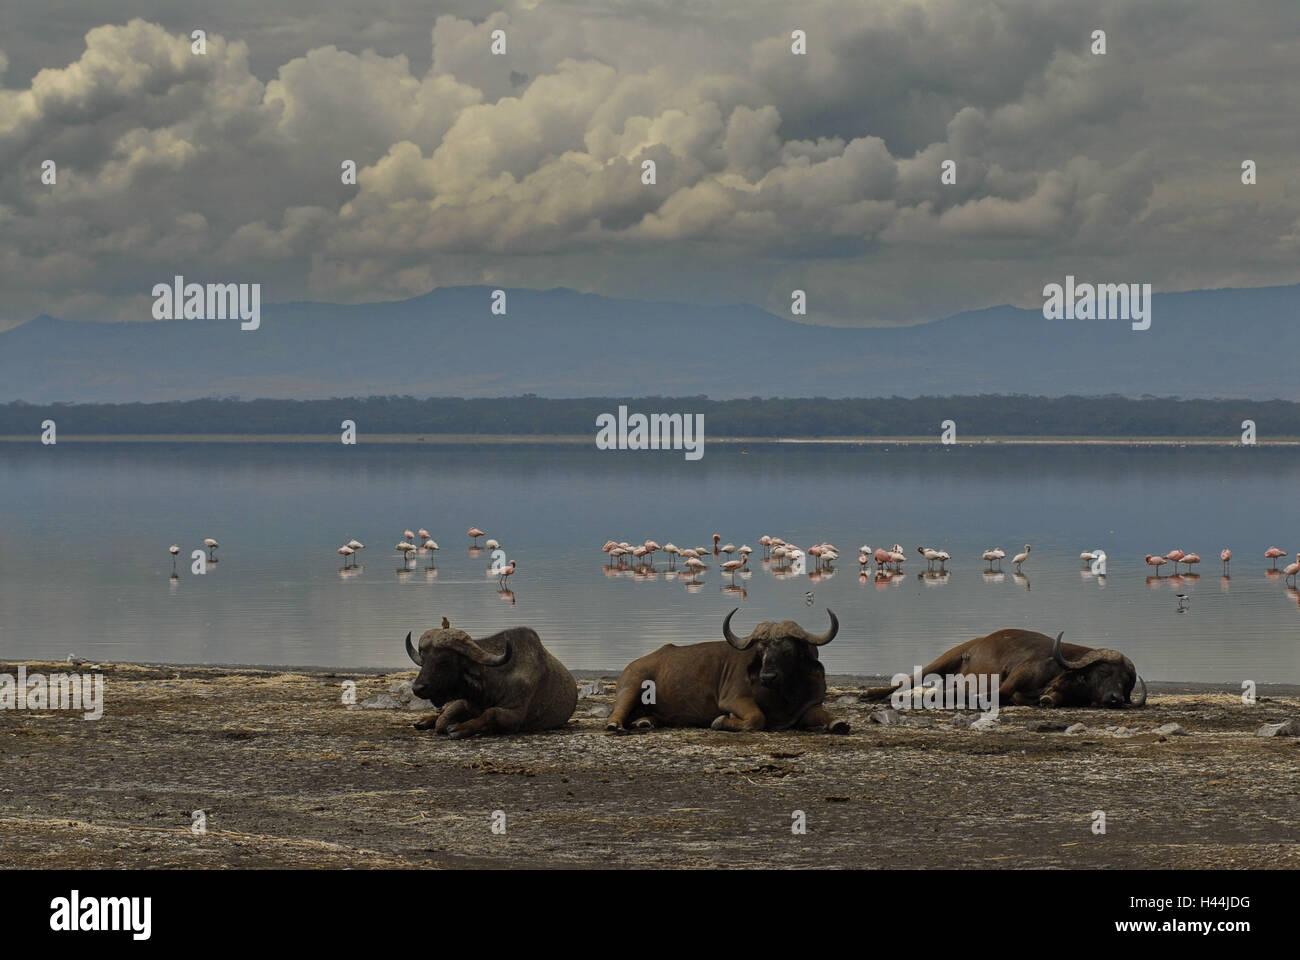 Africa, Kenya, Nakuru lake, flamingo, shore, water buffalo, Stock Photo